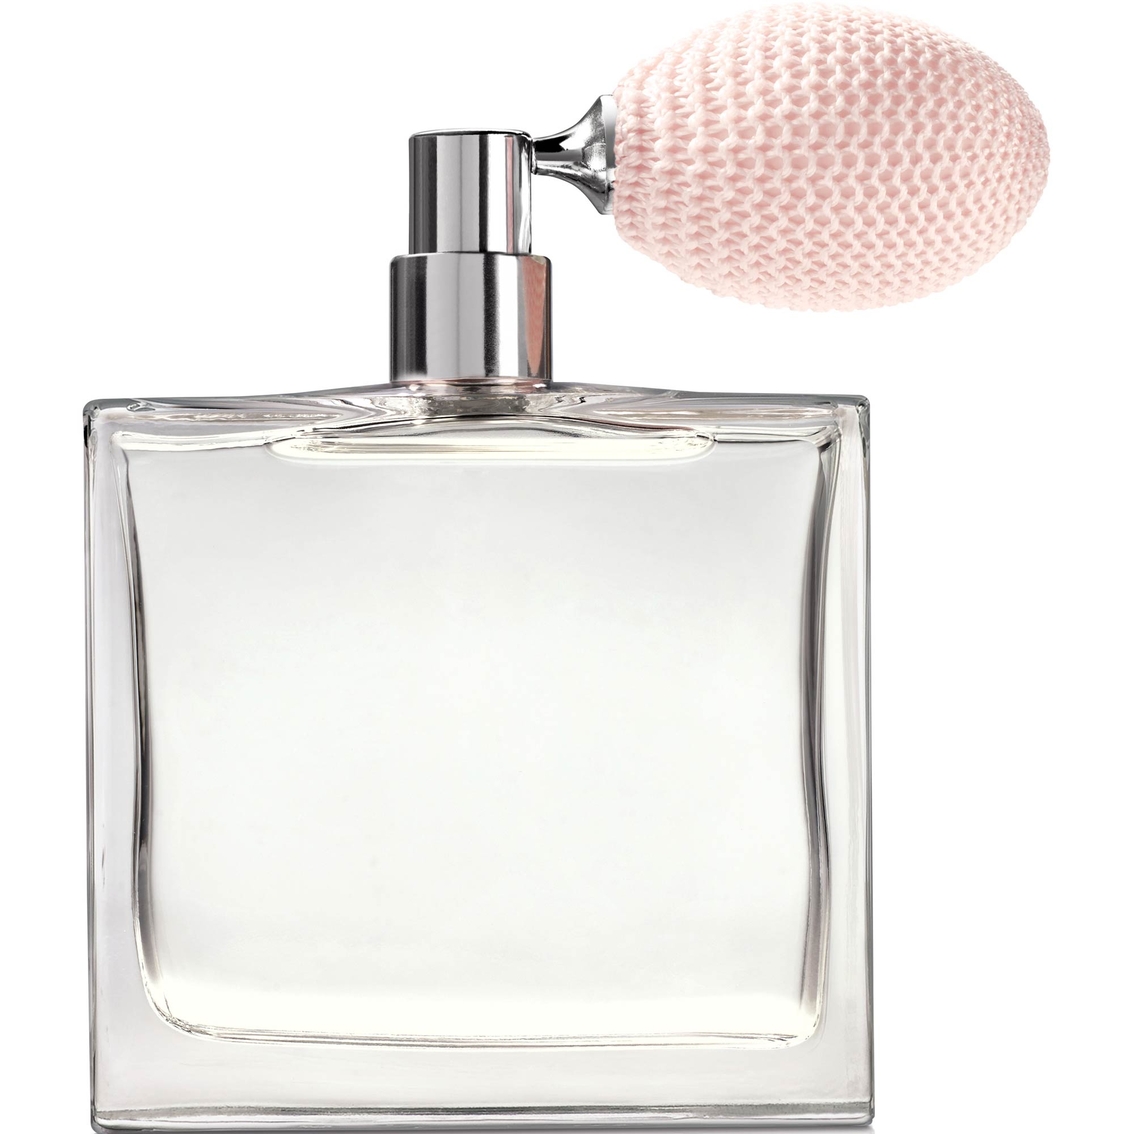 ralph lauren perfume limited edition